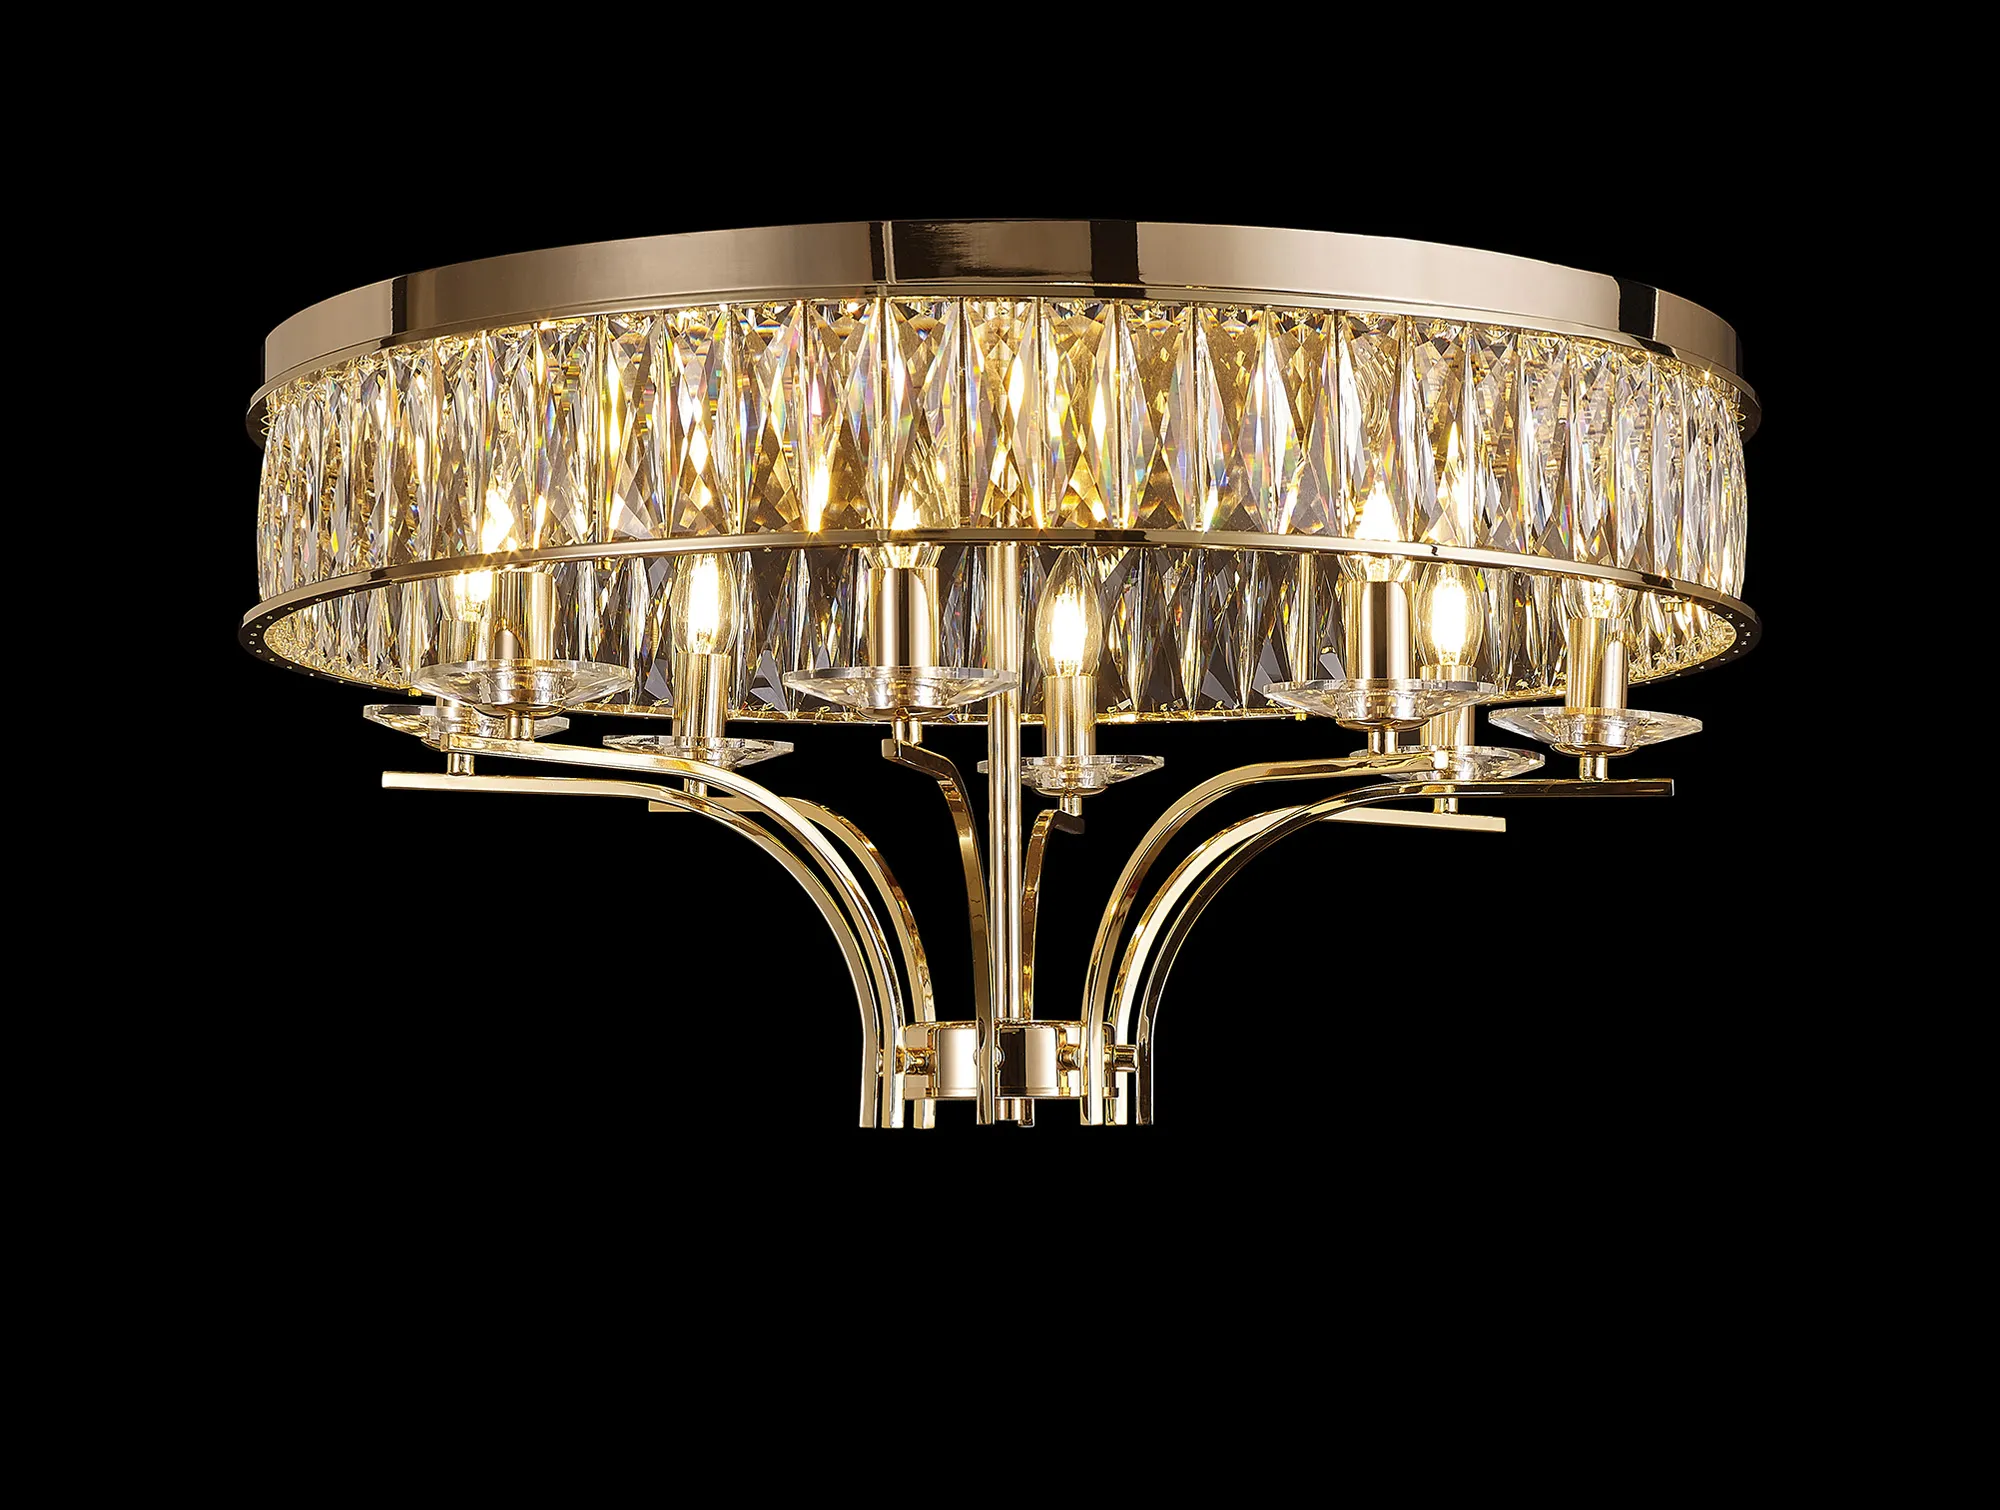 Vivienne French Gold Crystal Ceiling Lights Diyas Flush Crystal Fittings